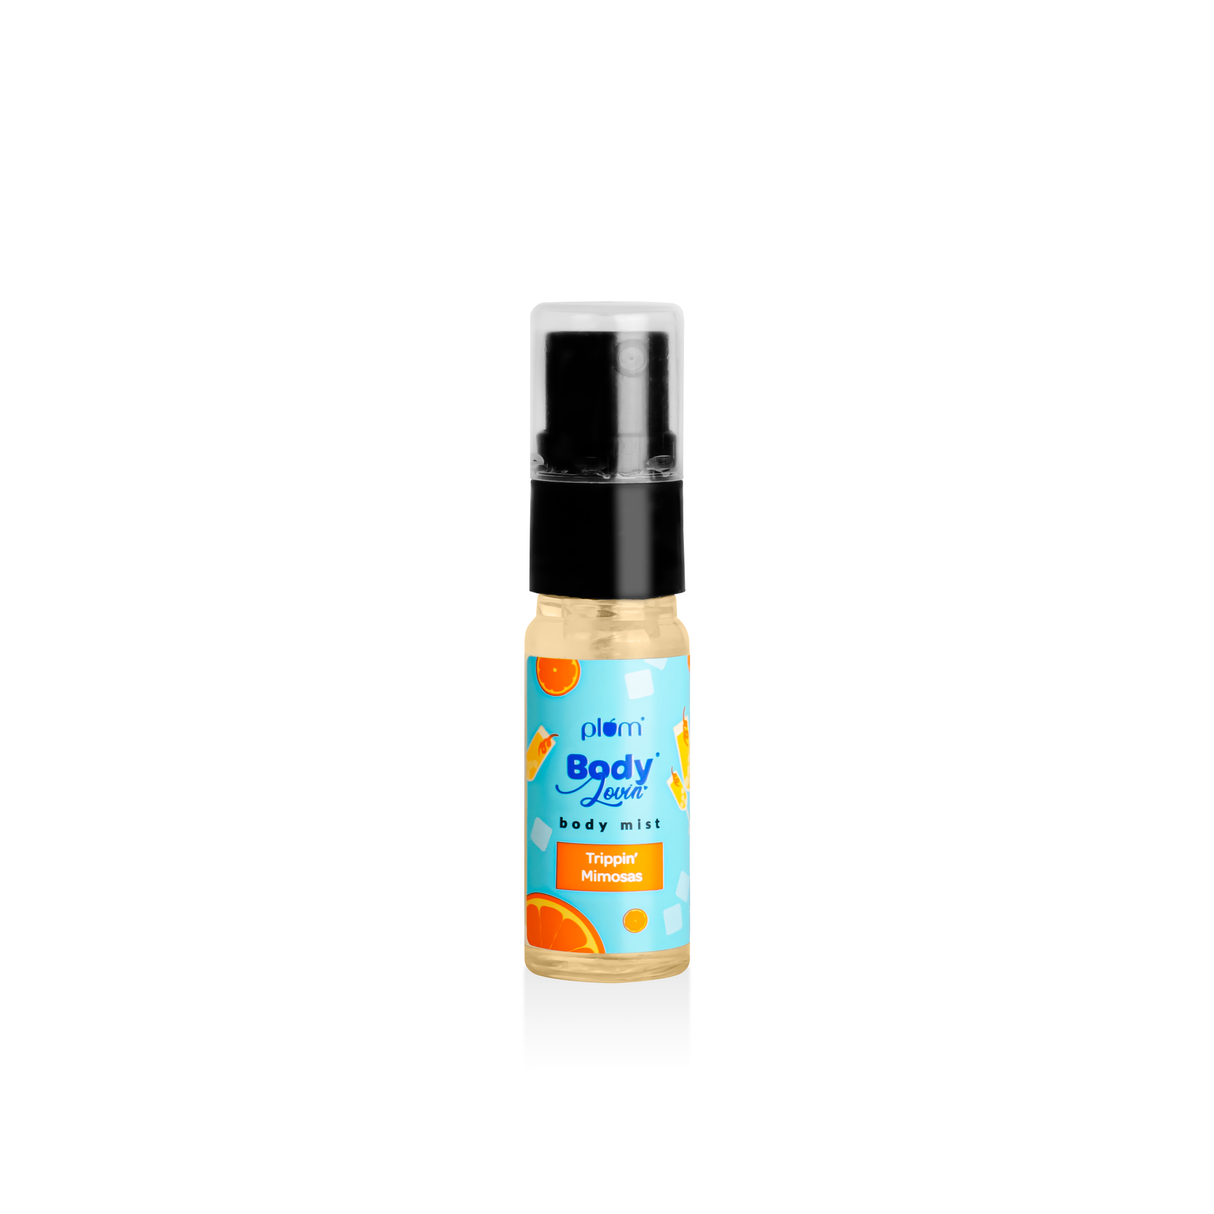 Plum BodyLovin' Trippin' Mimosas Body Mist (5ml) | Citrusy Fragrance | Aloe-Infused | Instantly Refreshes